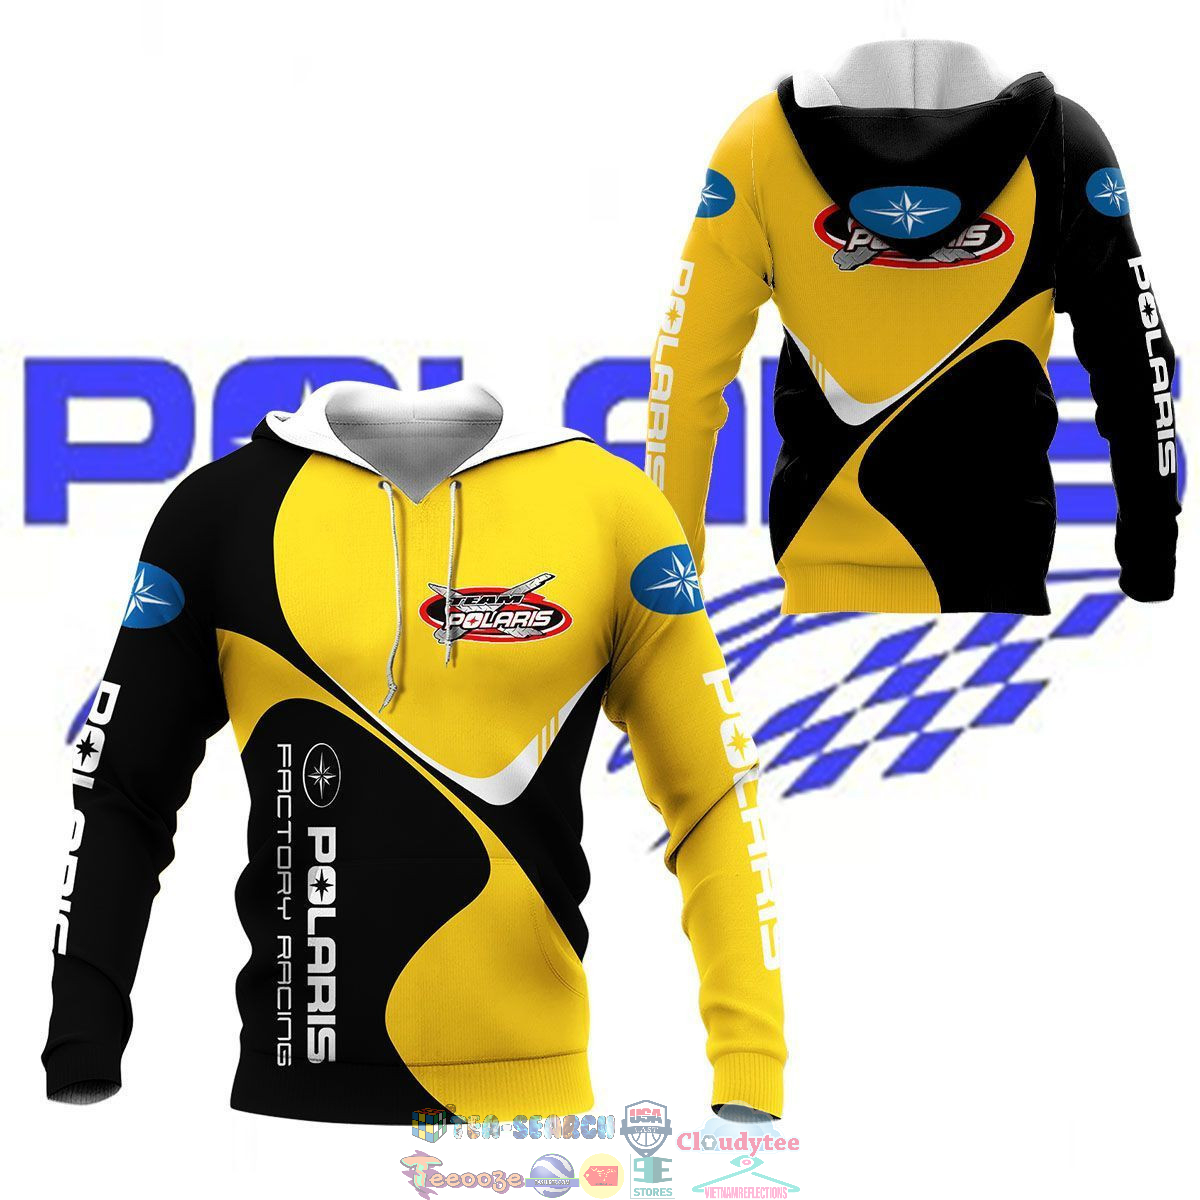 Polaris Factory Racing Yellow 3D hoodie and t-shirt